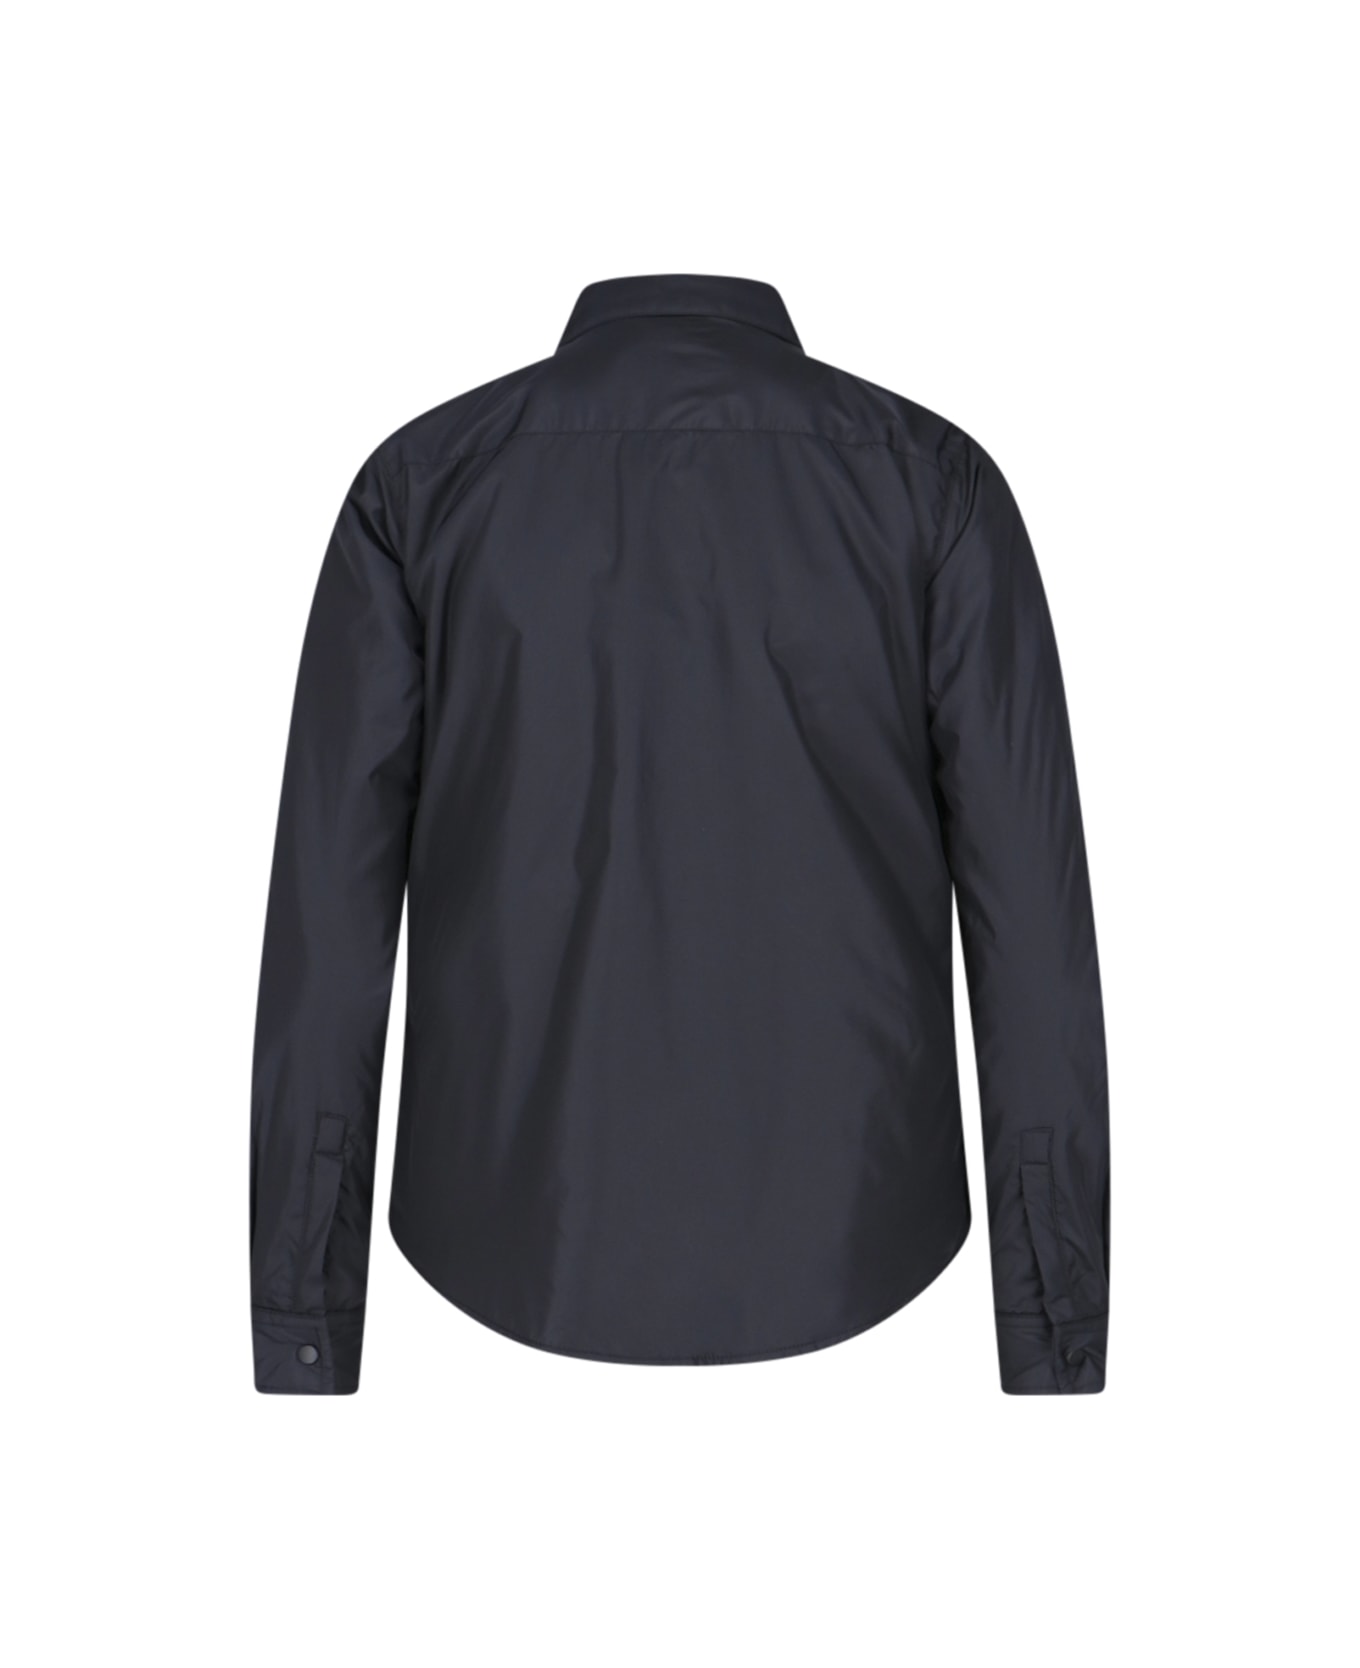 Aspesi Black Glue Shirt Jacket - Black